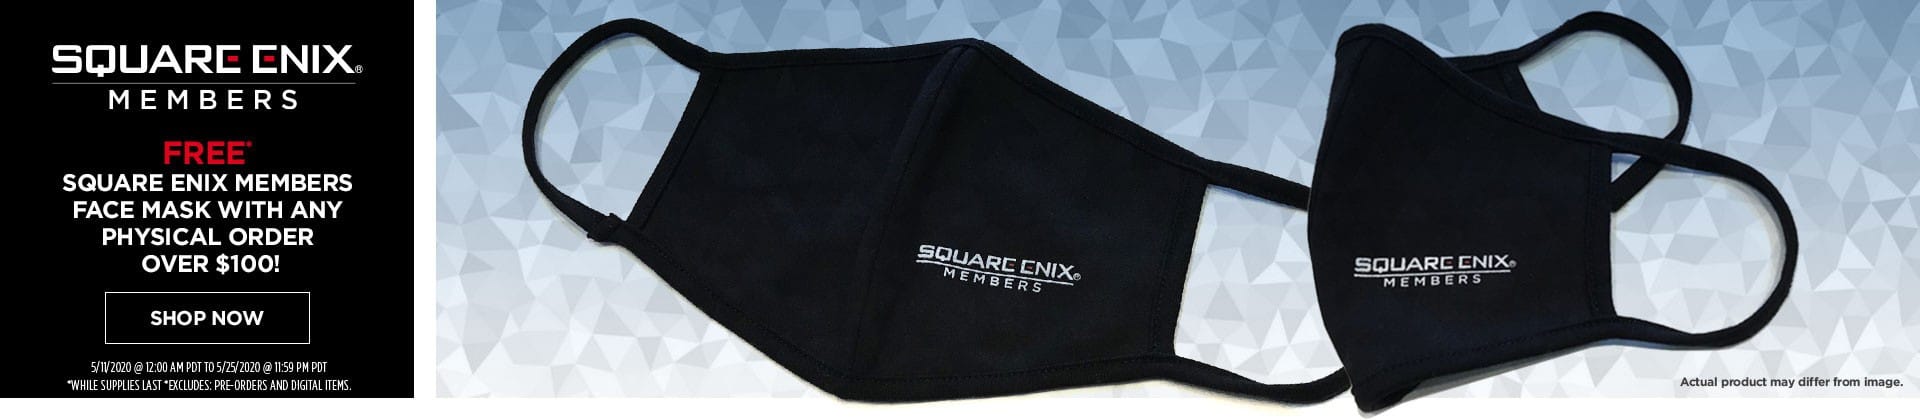 Square Enix mask banner